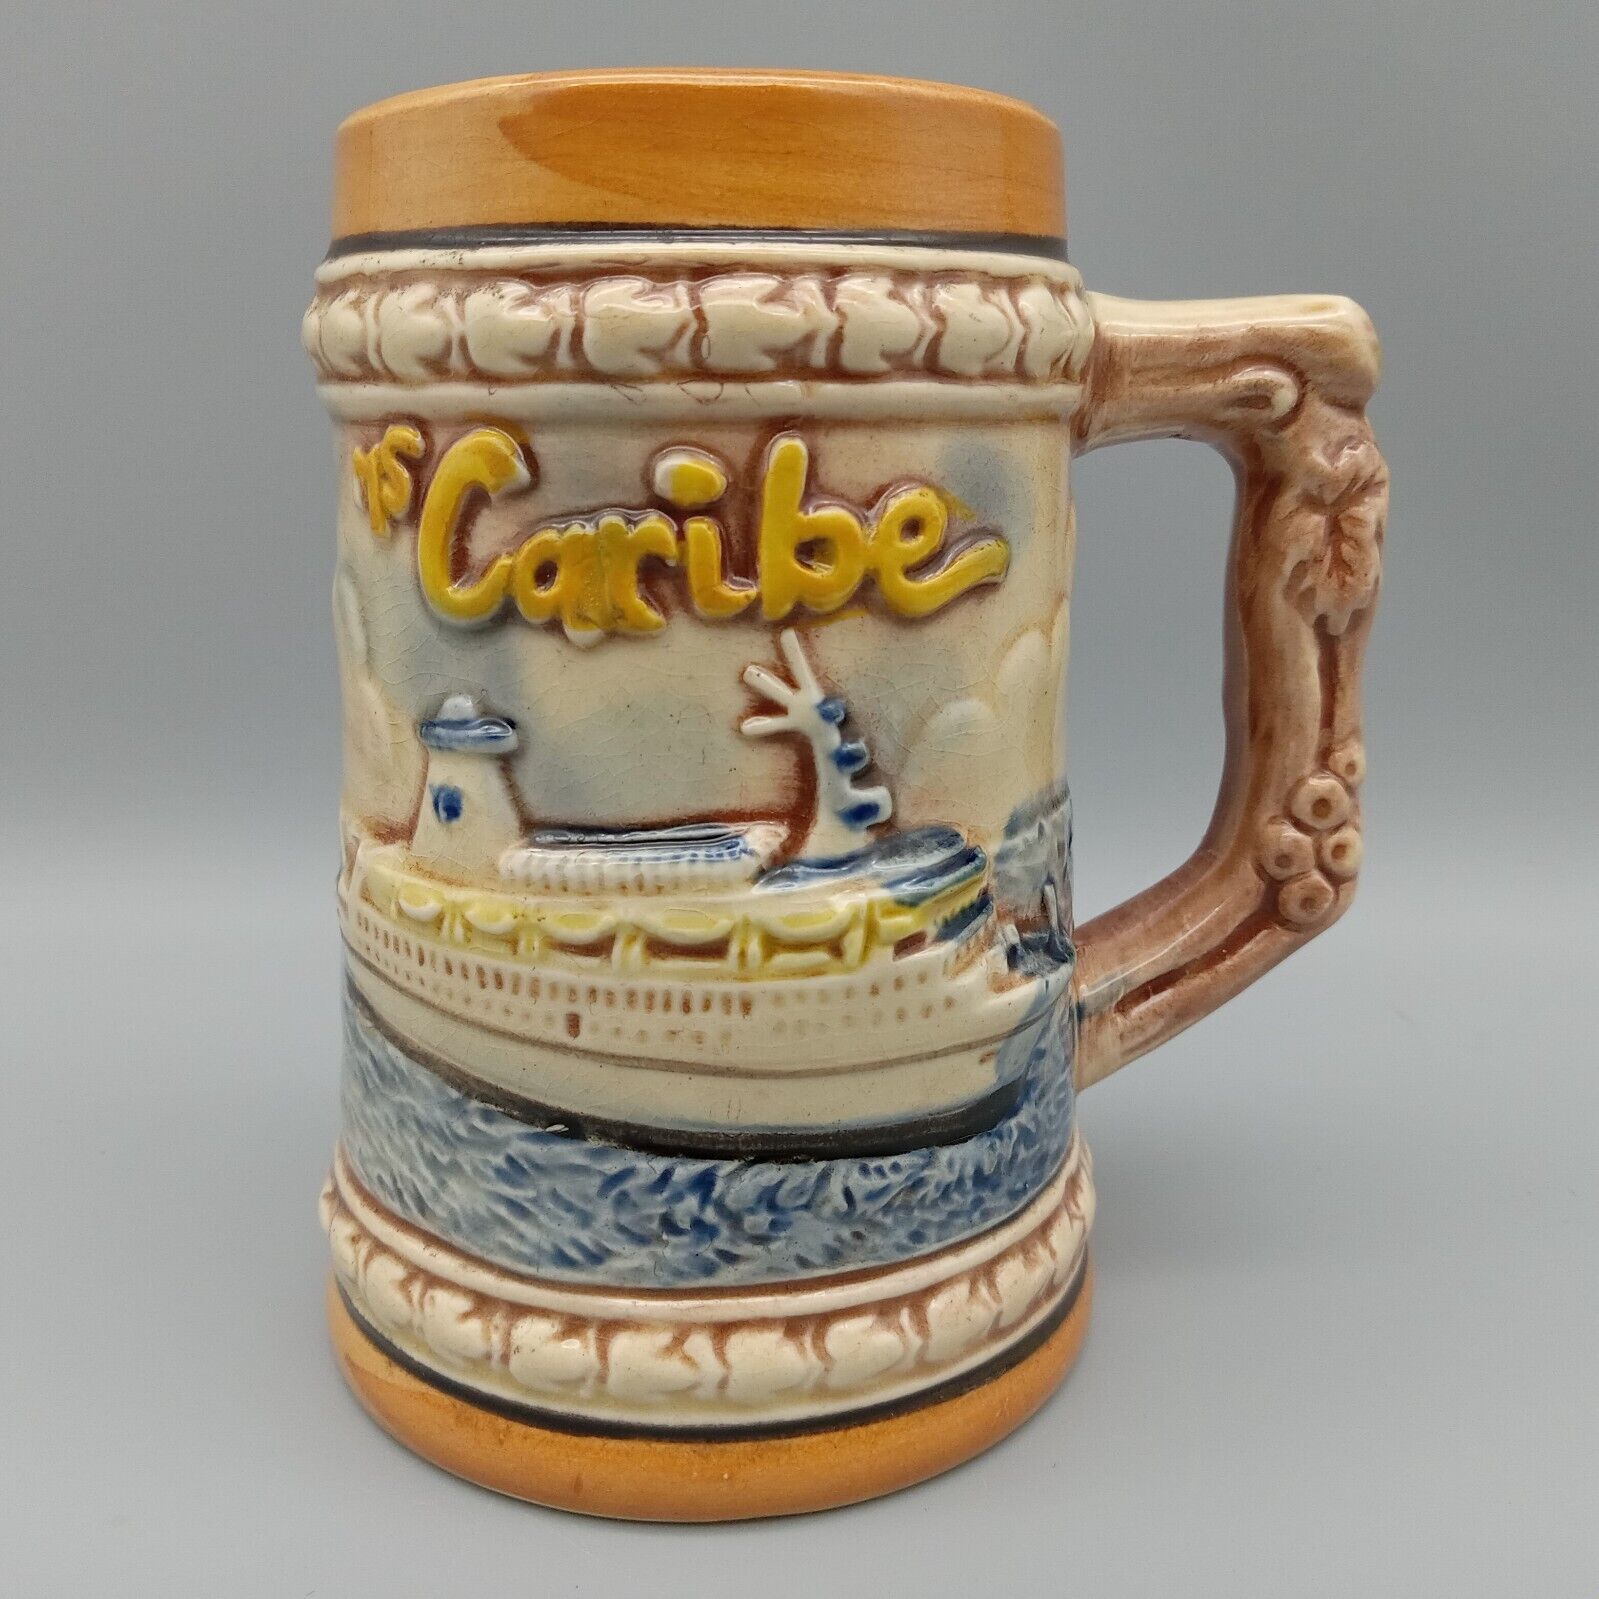 M/S Caribe Commodore Cruise Line Ceramic Souvenir Beer Stein Mug Made In Japan